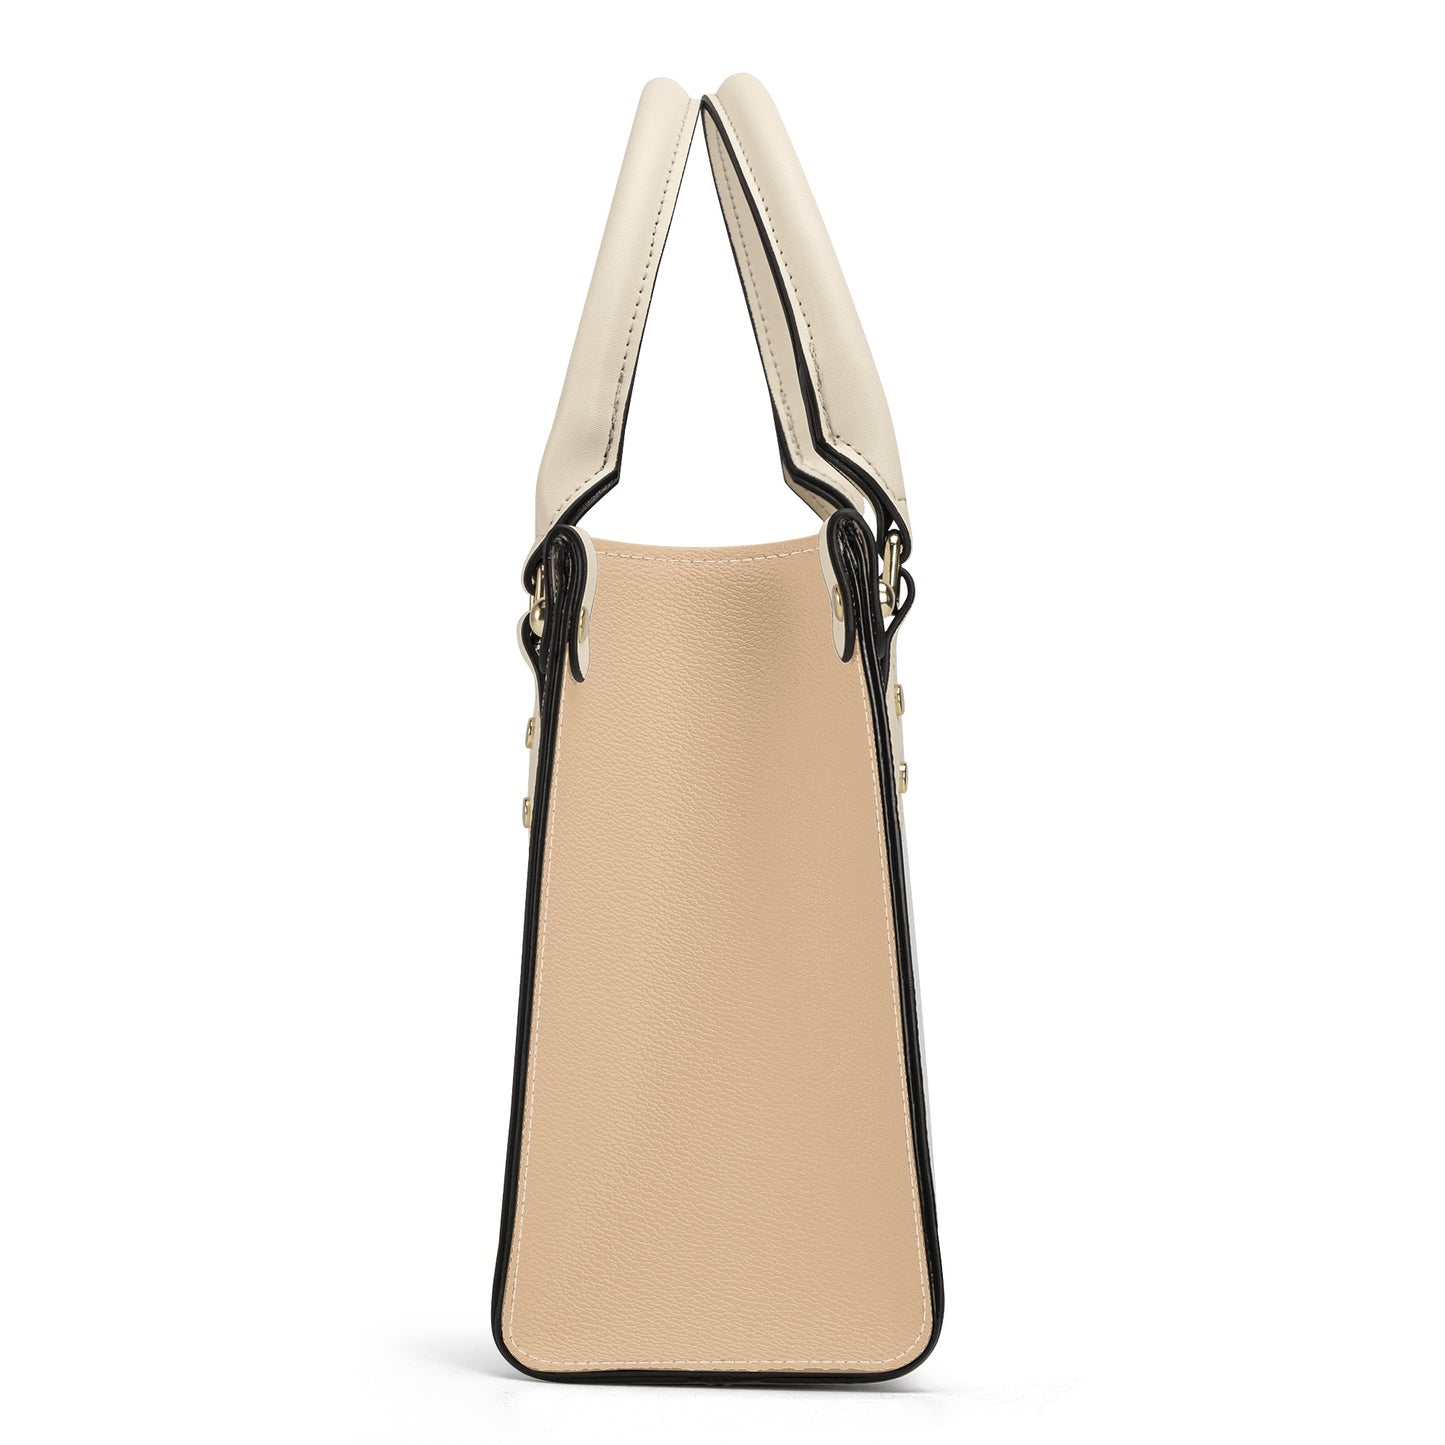 Sandy - Luxury Women Handbag